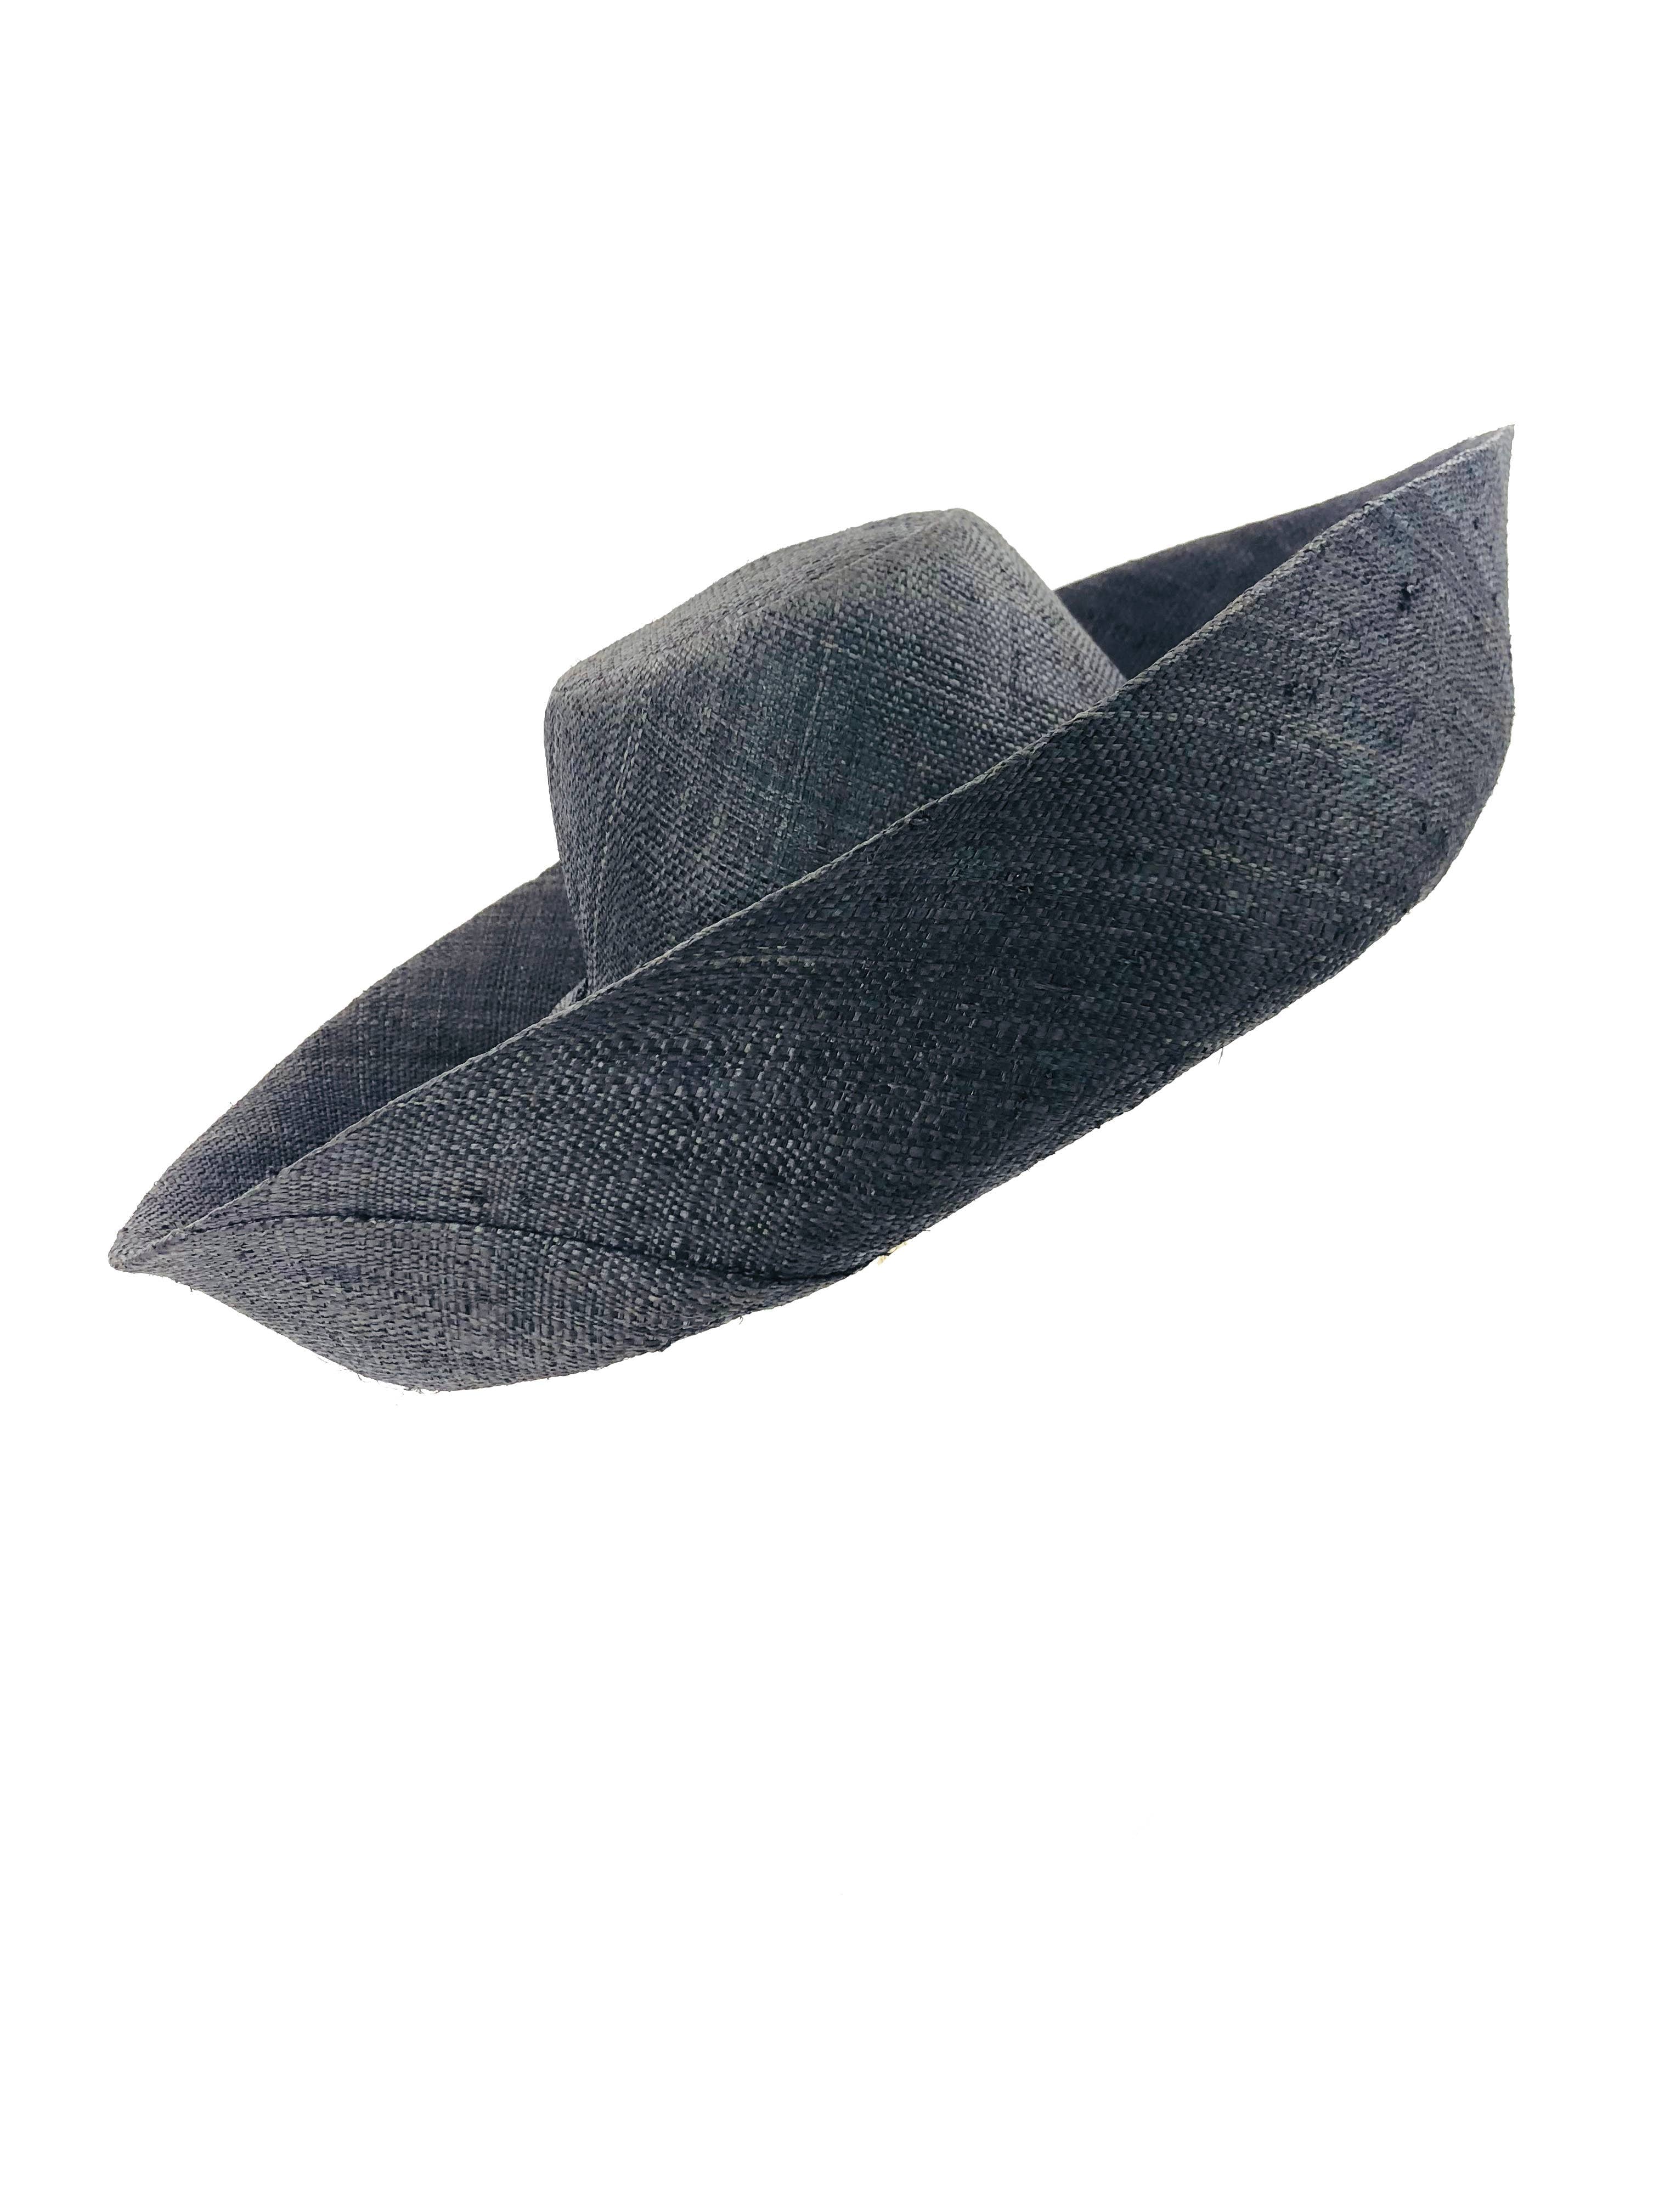 Shebobo - Sun Hats: Solid Color Packable 5" Brim Raffia Straw